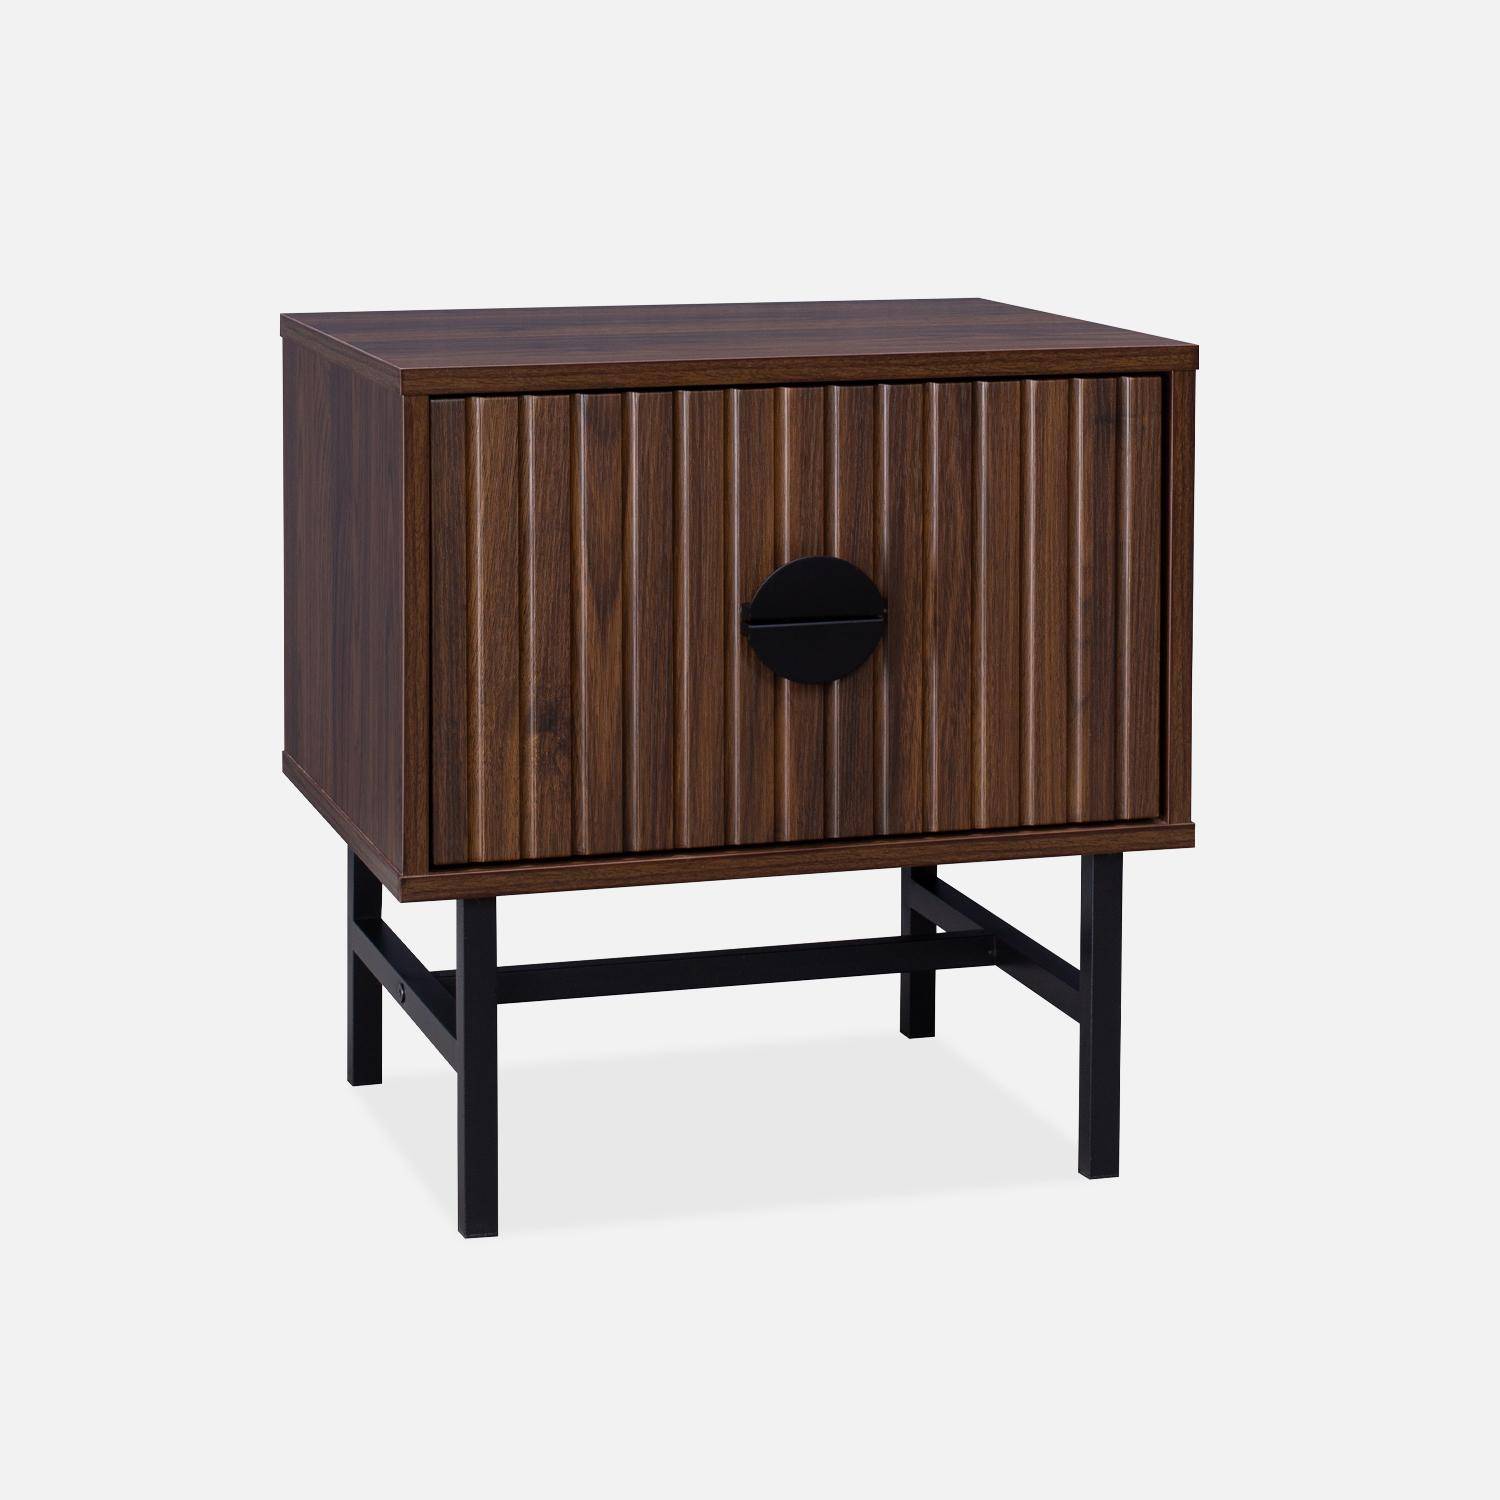 Bedside table, dark wood effect, grooved wood decor, one drawer, L 48 x W 39 x H 50cm,sweeek,Photo1